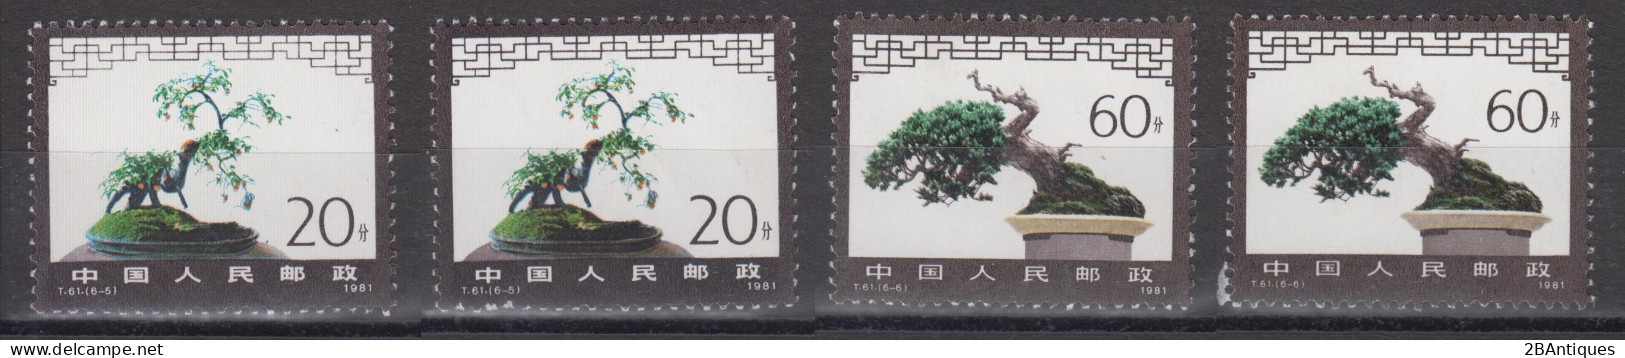 PR CHINA 1981 - Miniature Landscapes (Dwarf Trees) MNH** OG XF KEY VALUES - Unused Stamps